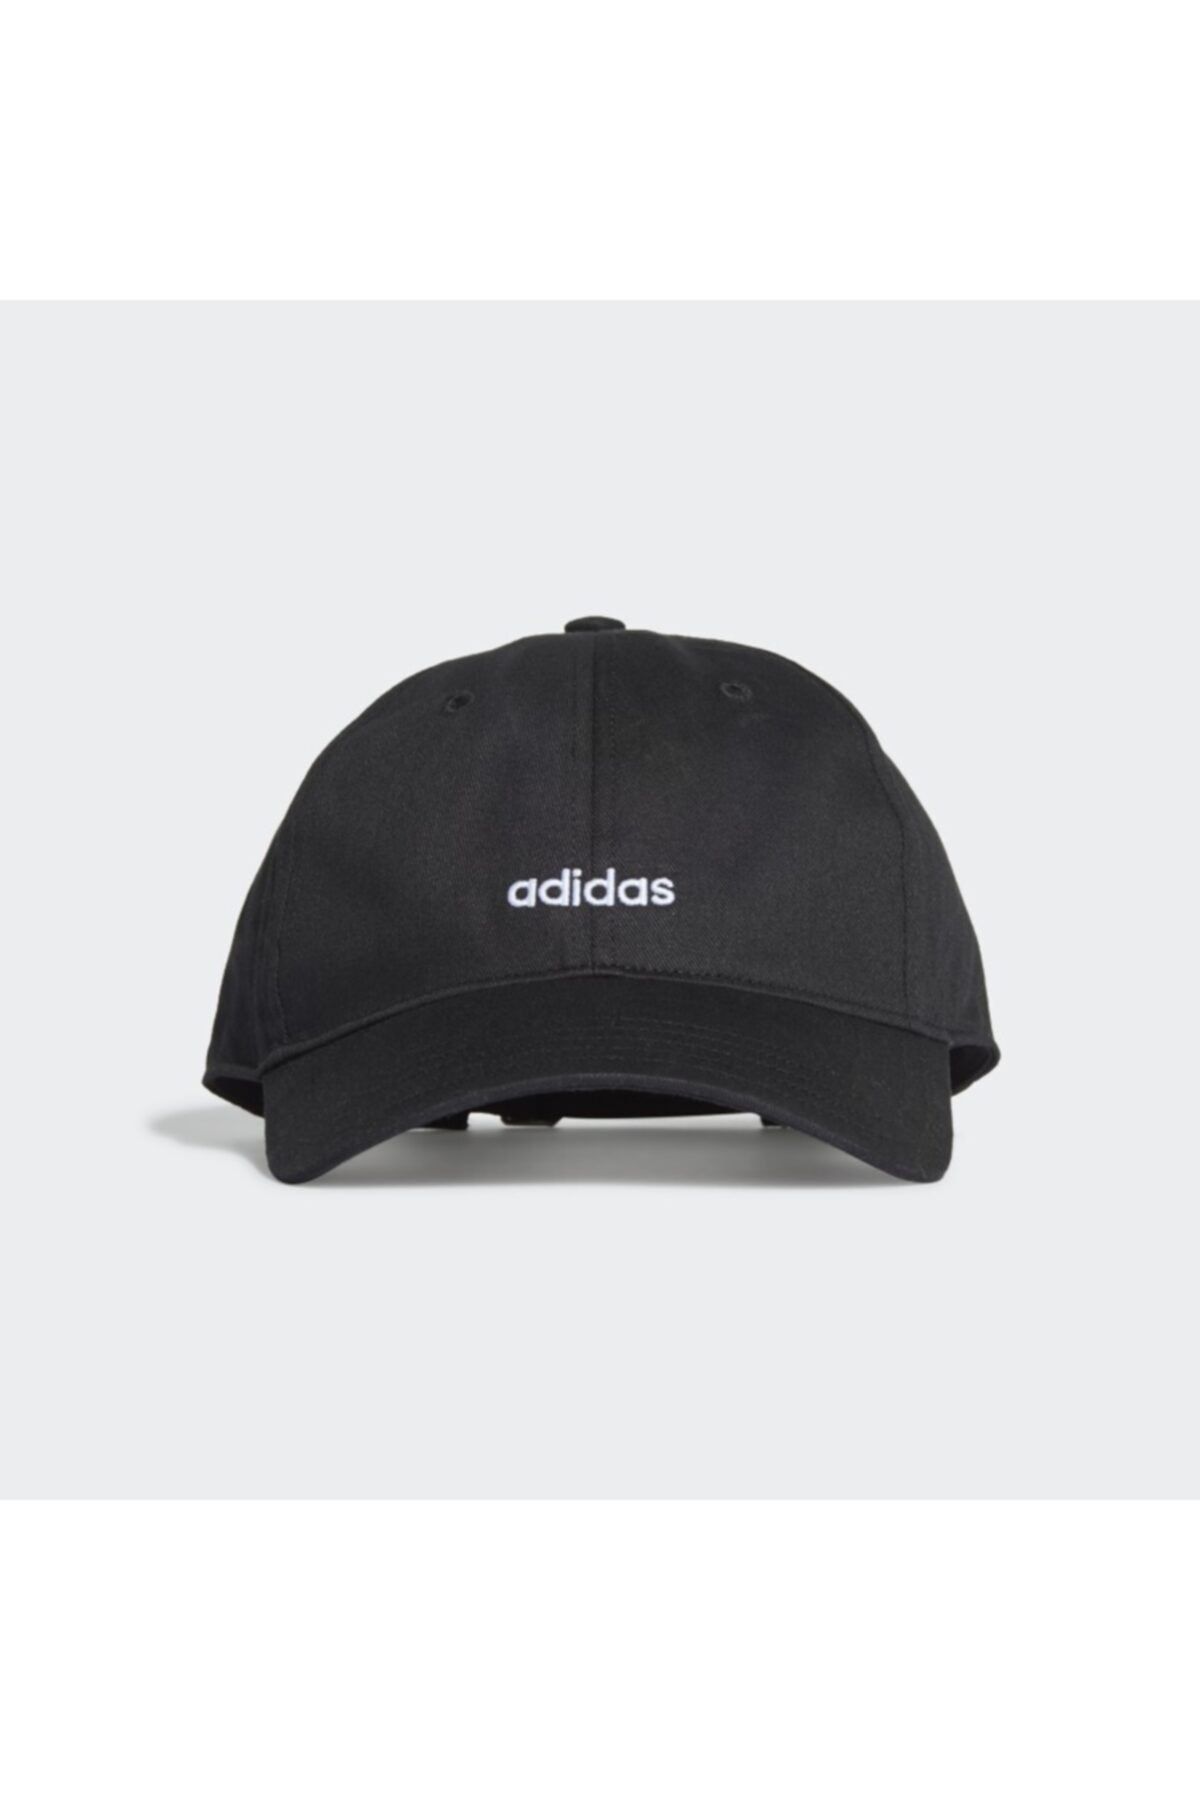 adidas Baseball Street Şapka - Siyah Ge1249